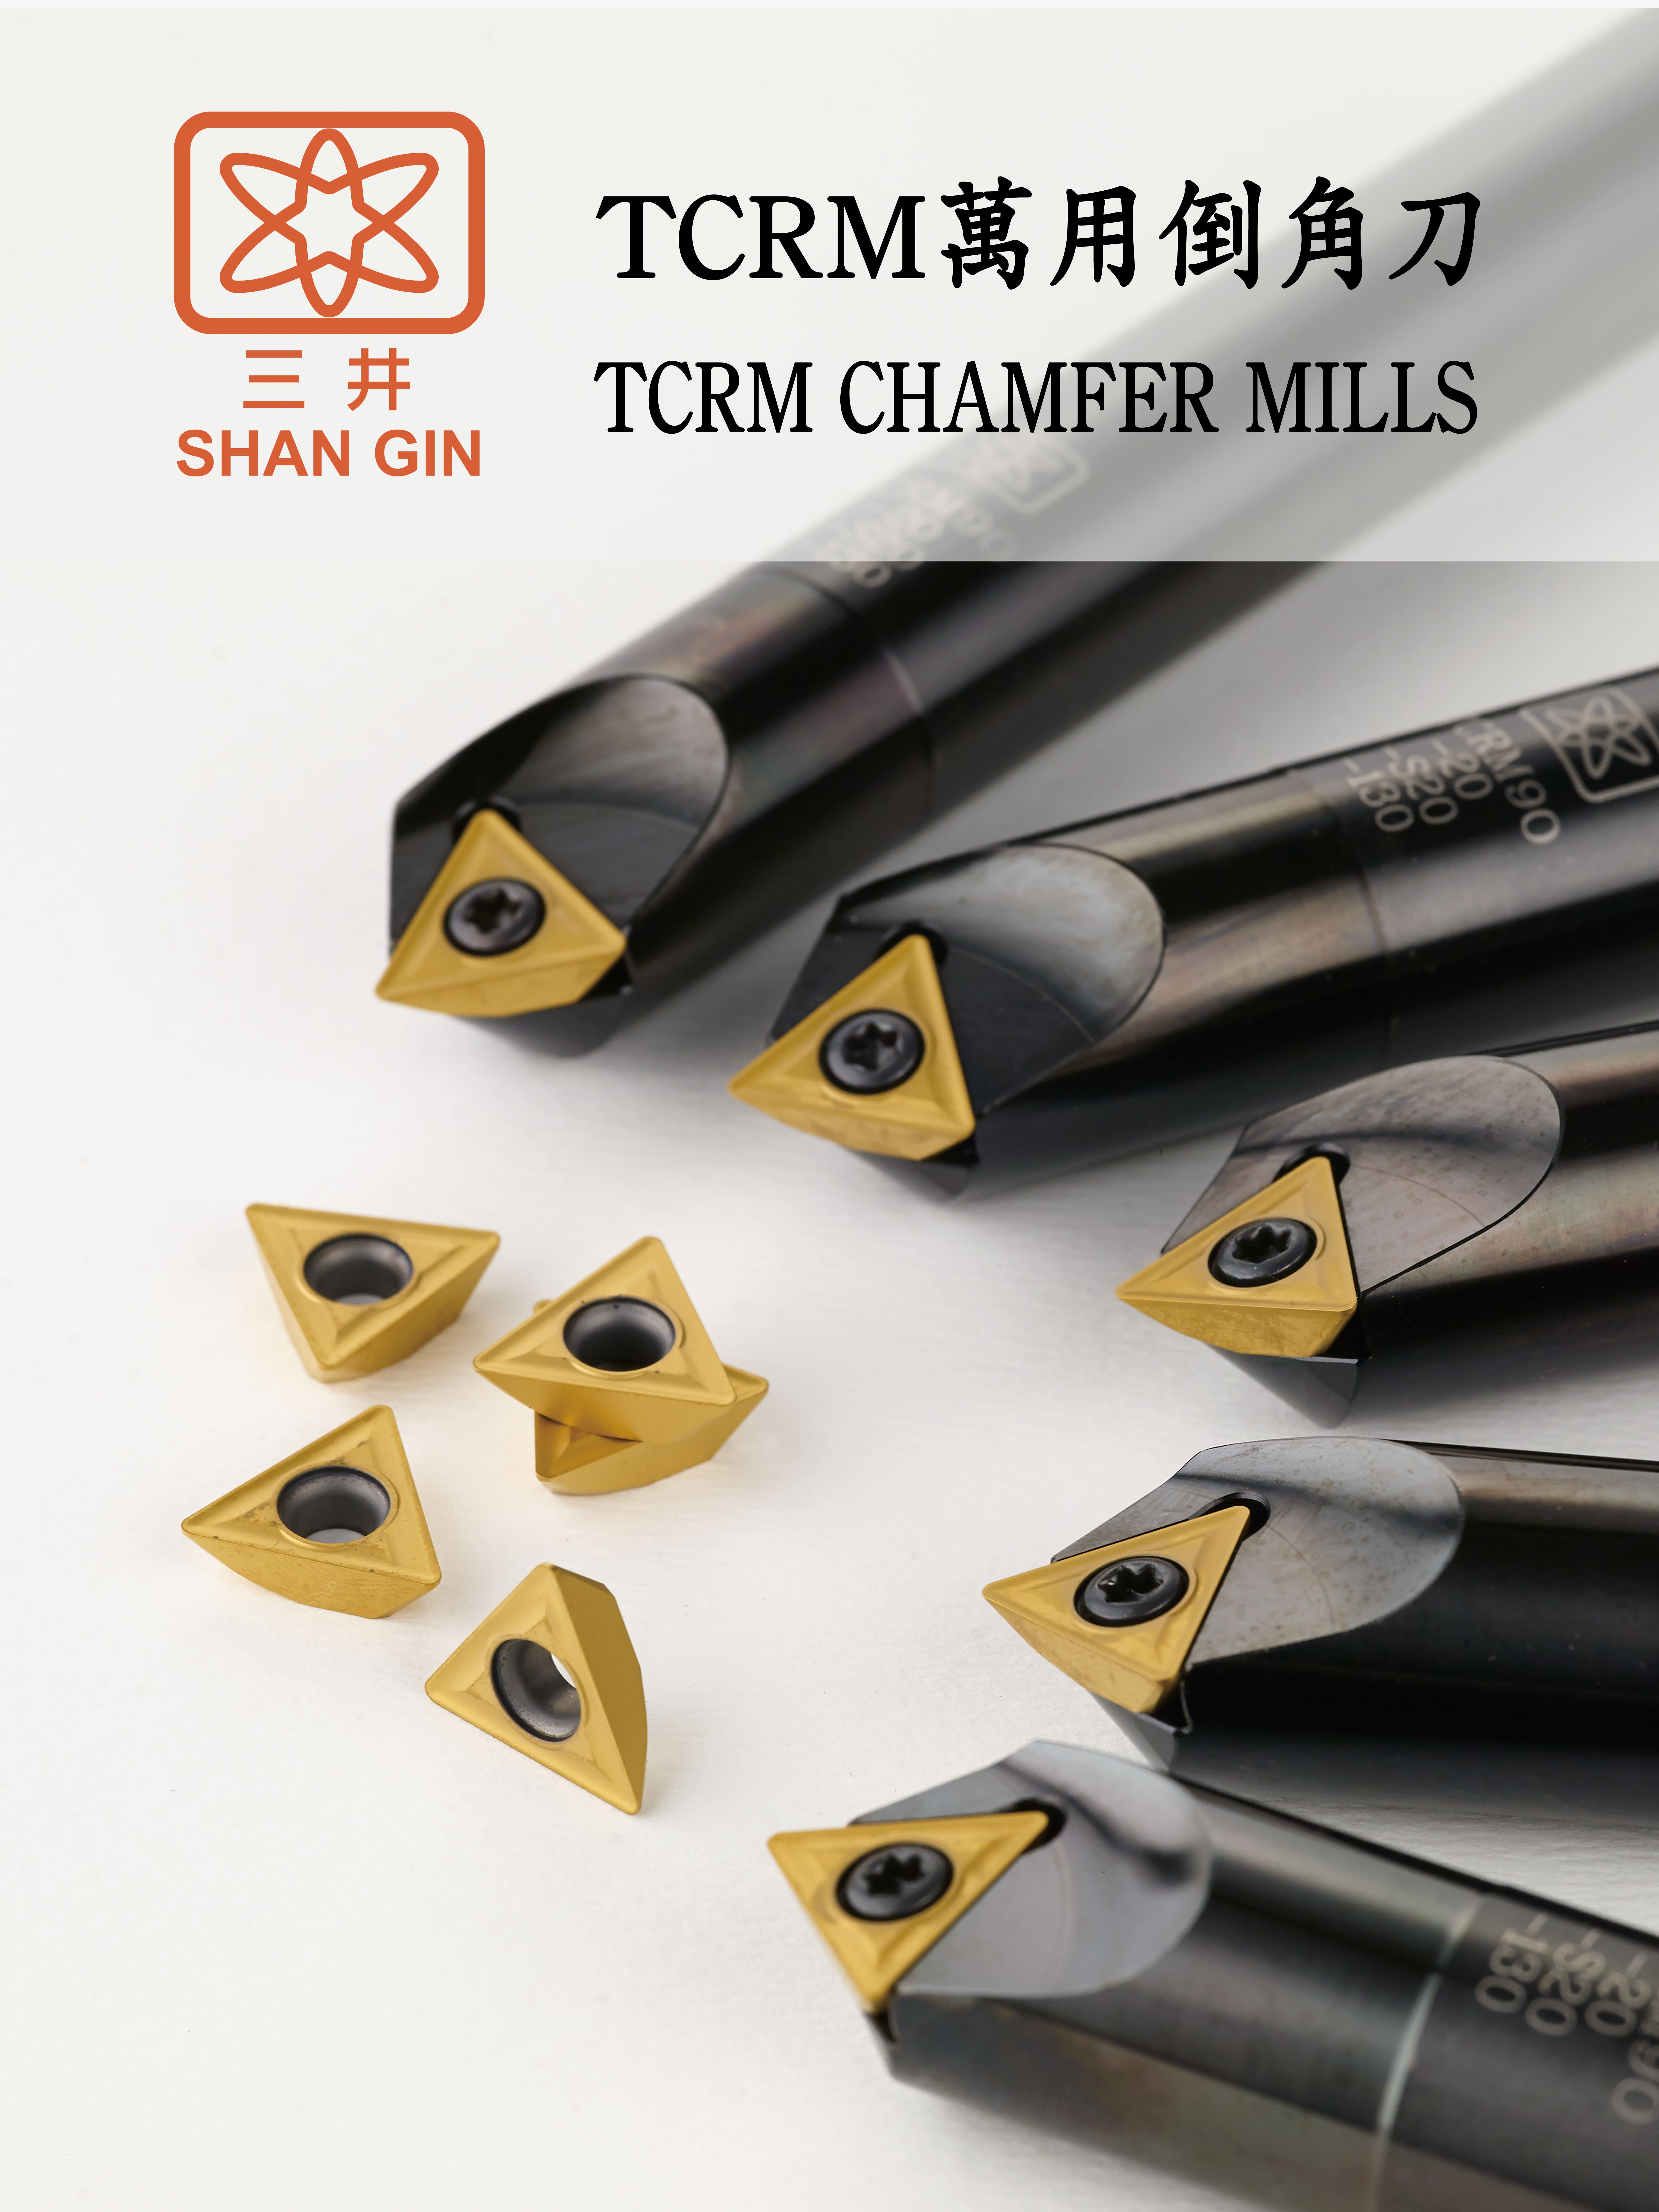 Catalog|TCRM CHAMFER MILLS